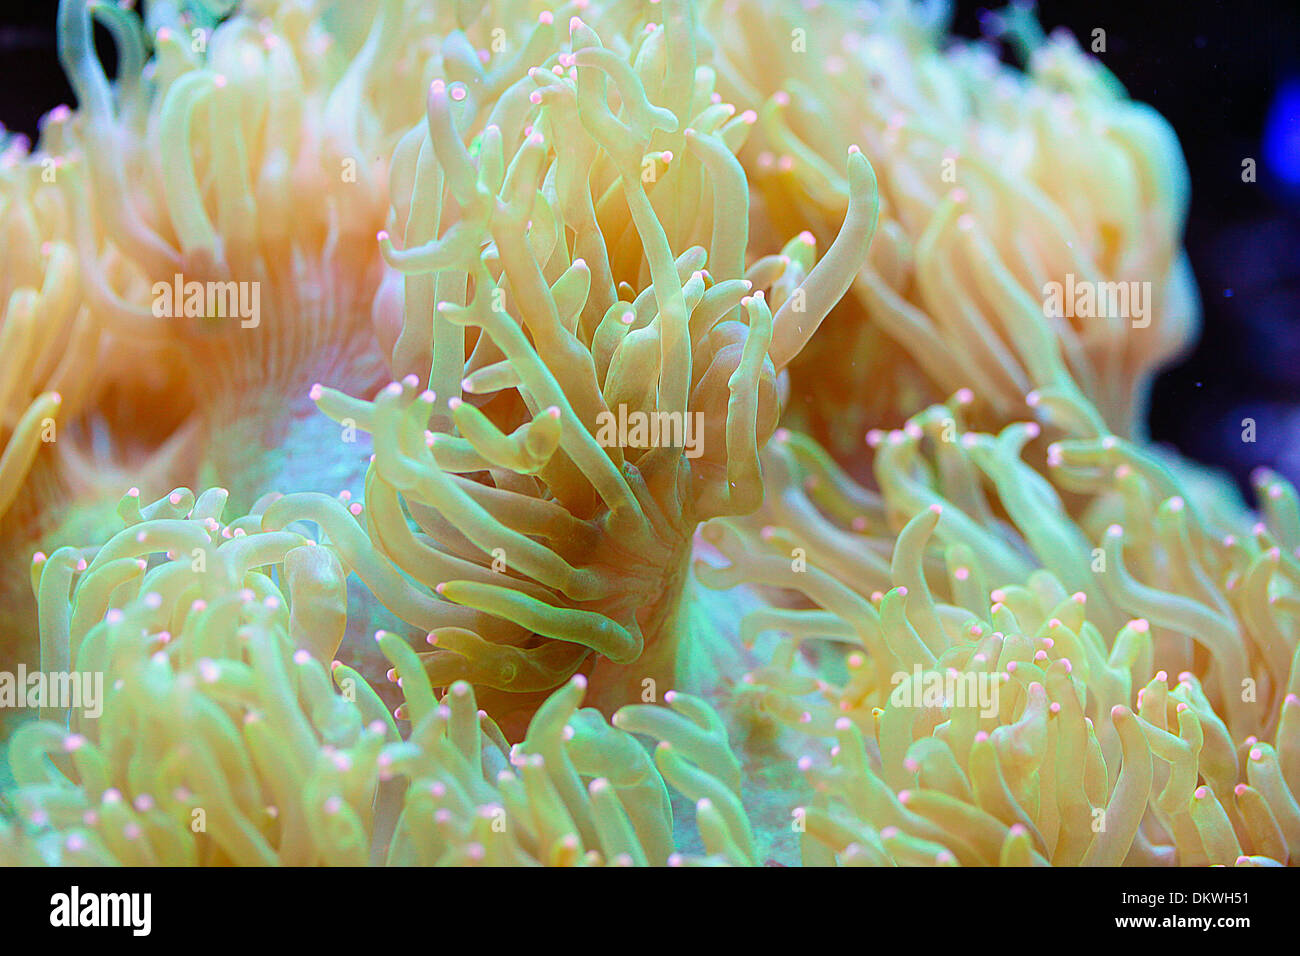 Elegance Coral Catalaphyllia jardinei LPS Stock Photo - Alamy